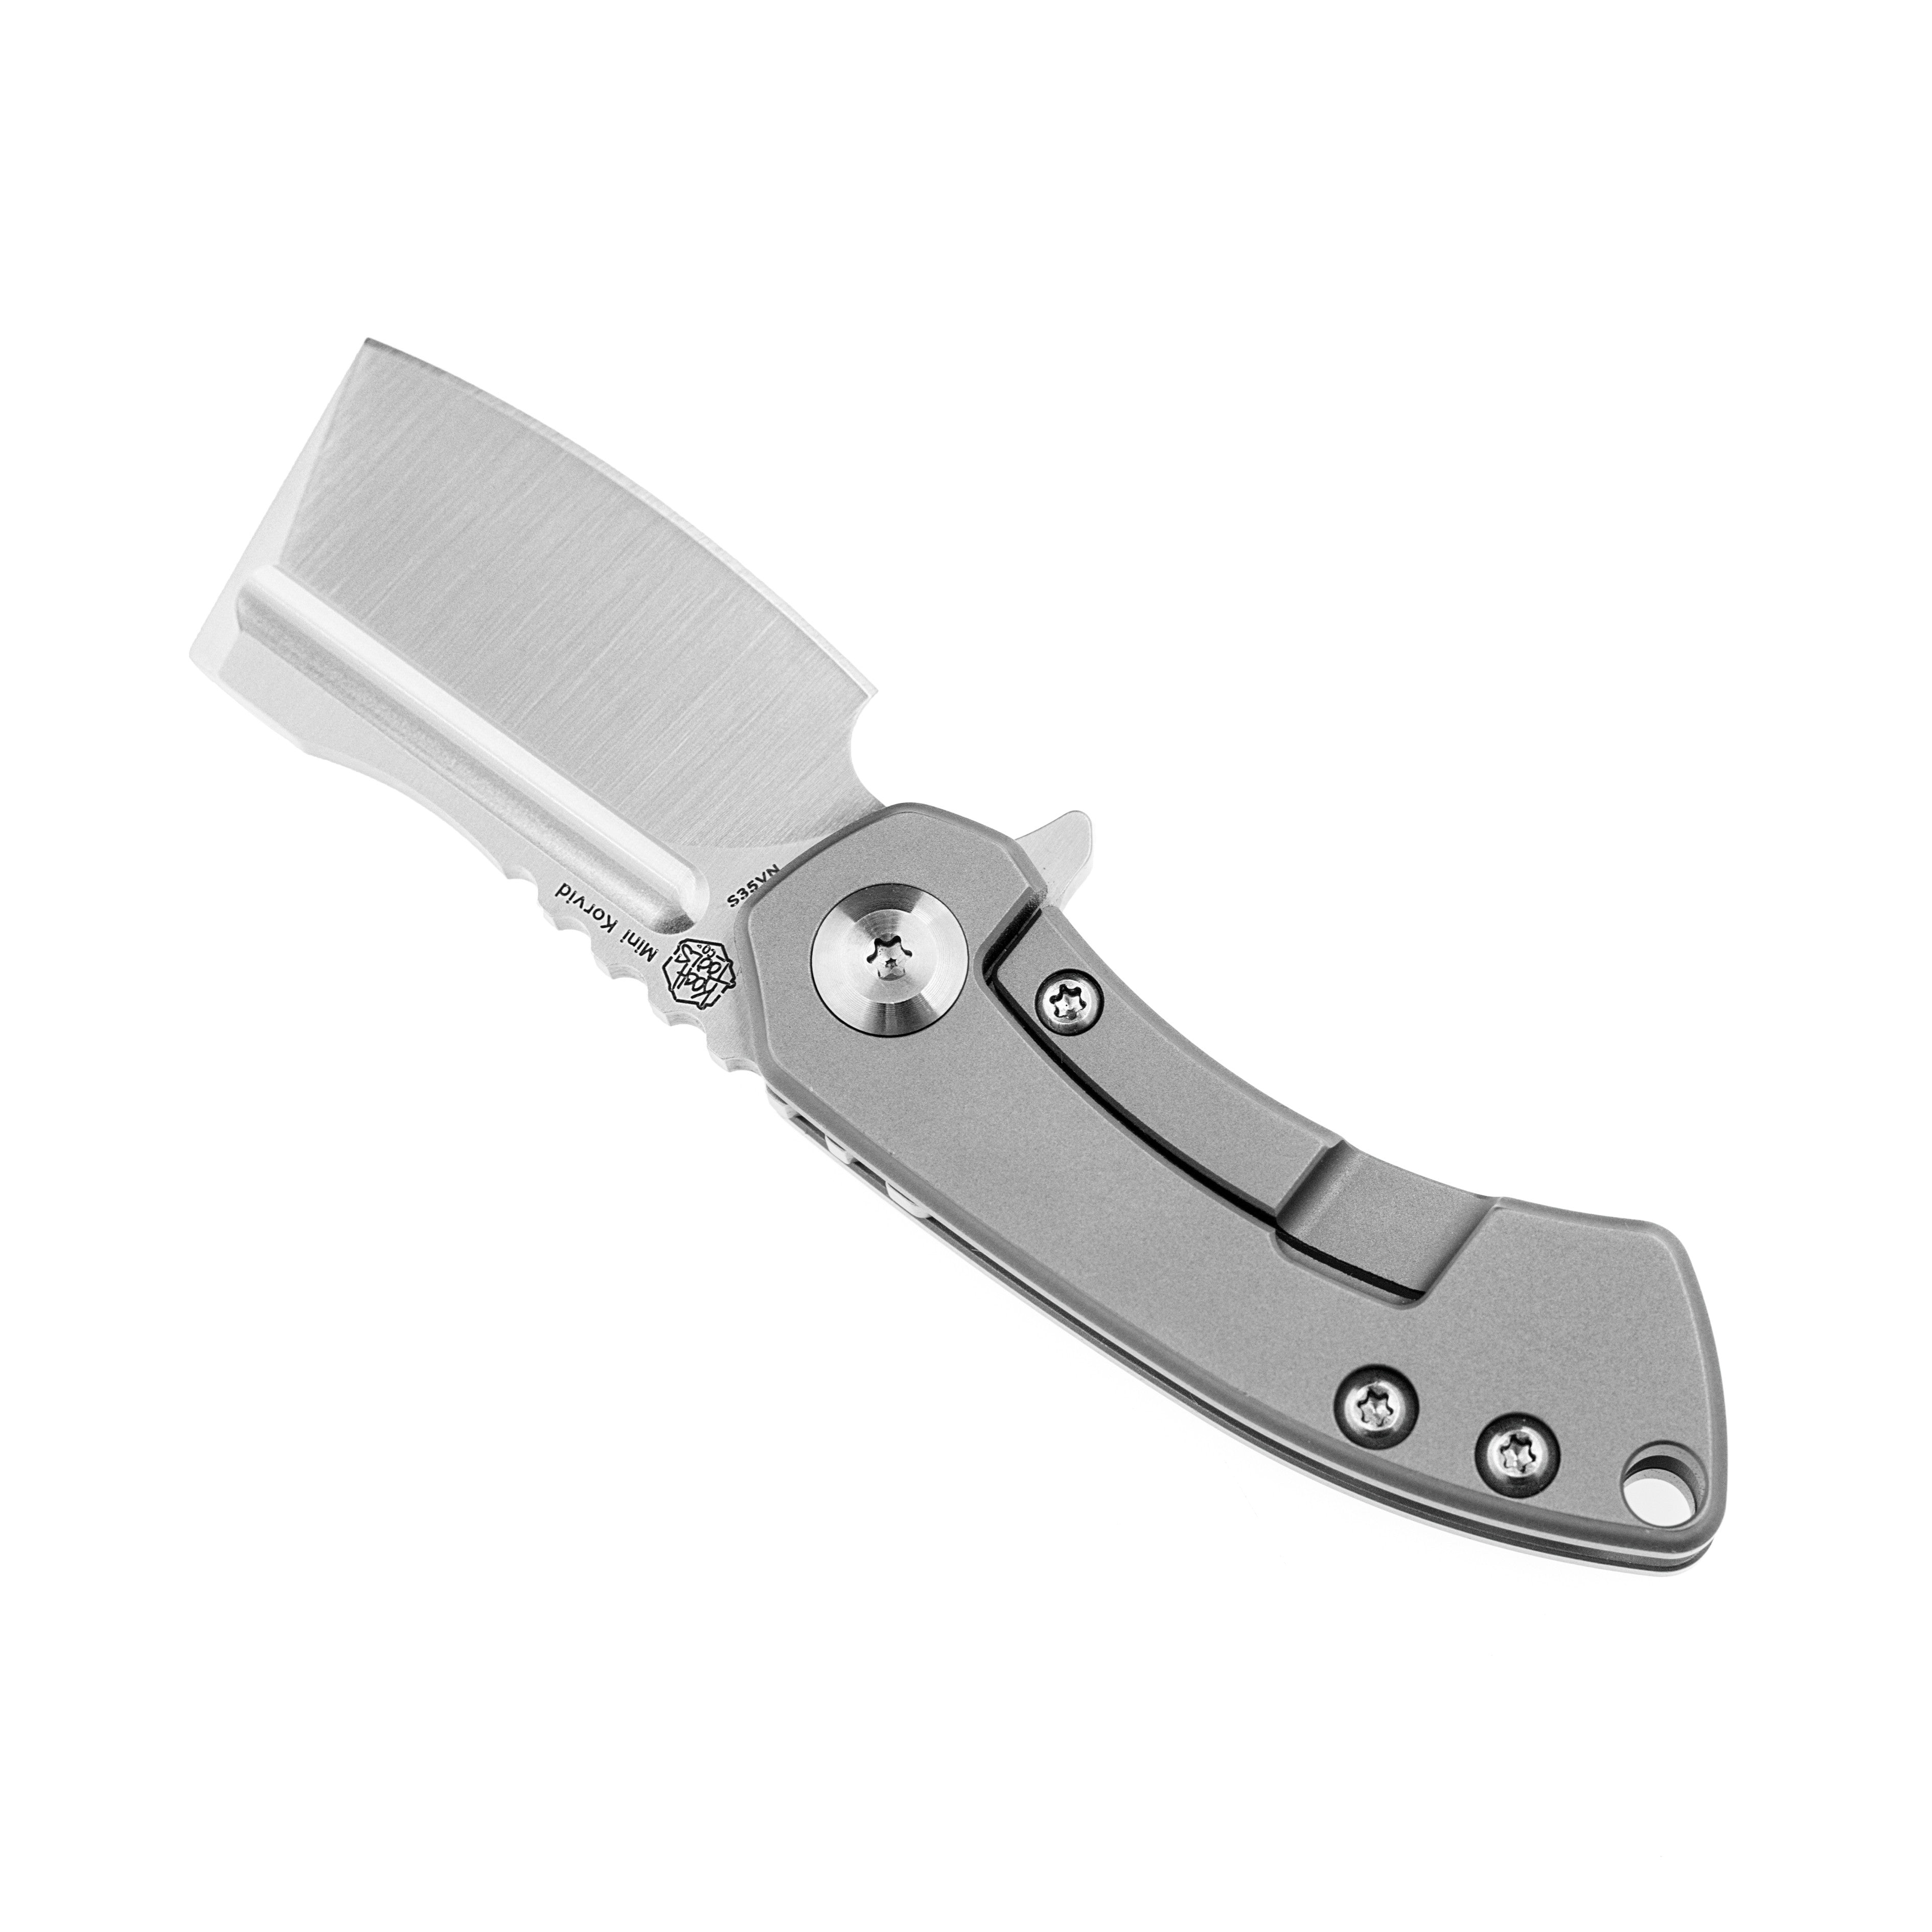 Kansept 刀具 Mini Korvid K3030A2 S35VN 刀片钛手柄框架锁